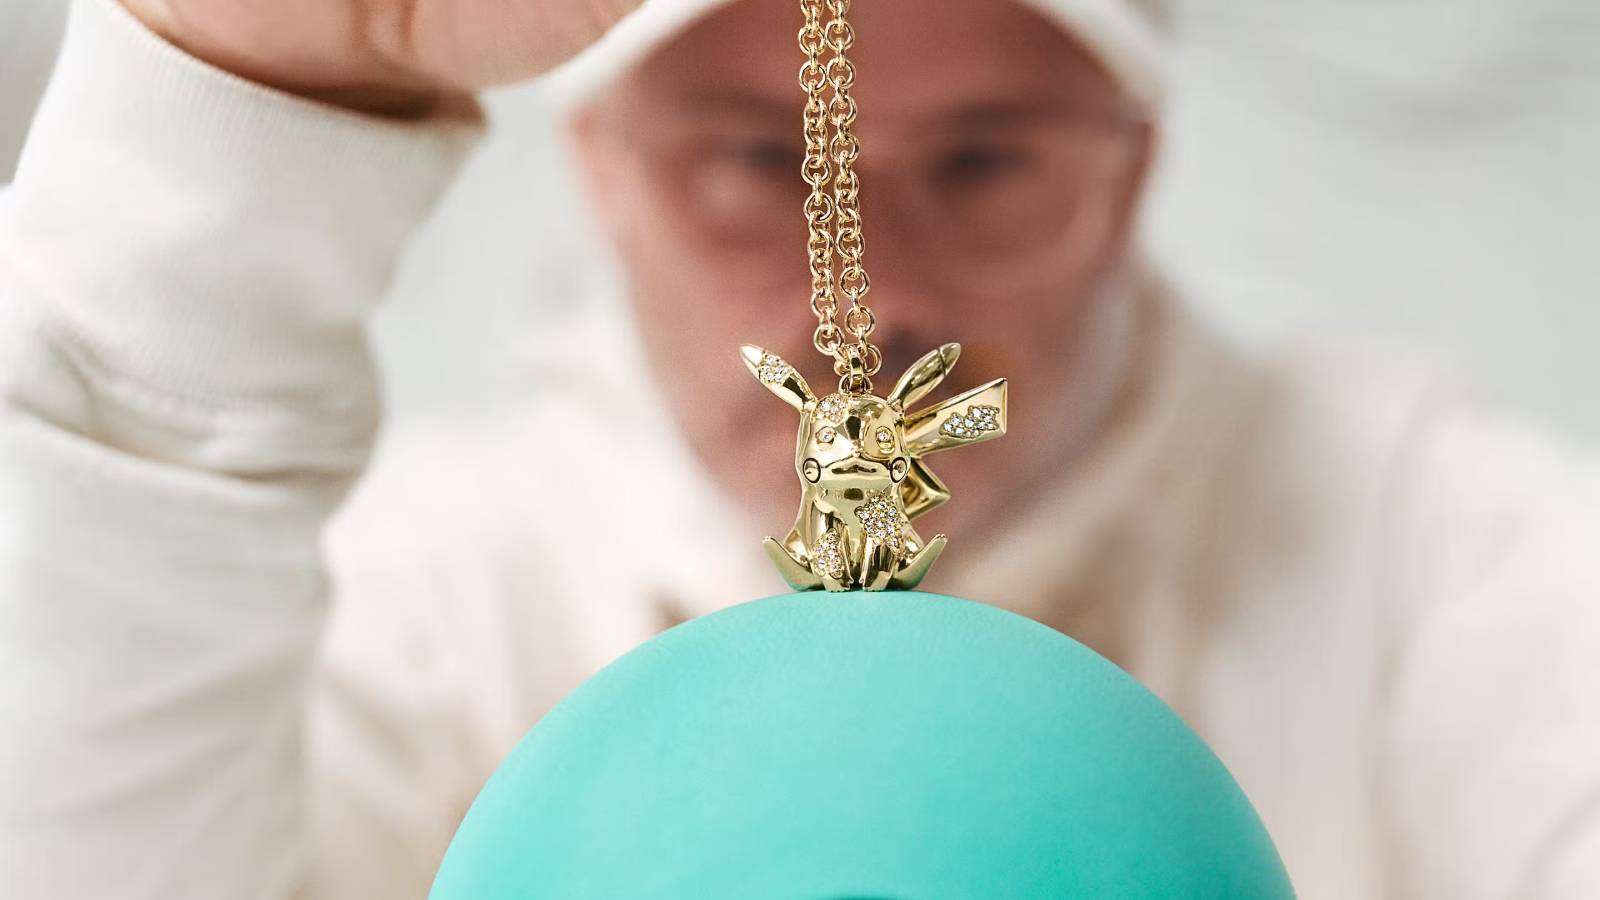 Artist Daniel Arsham holds a diamond Pikachu pendant